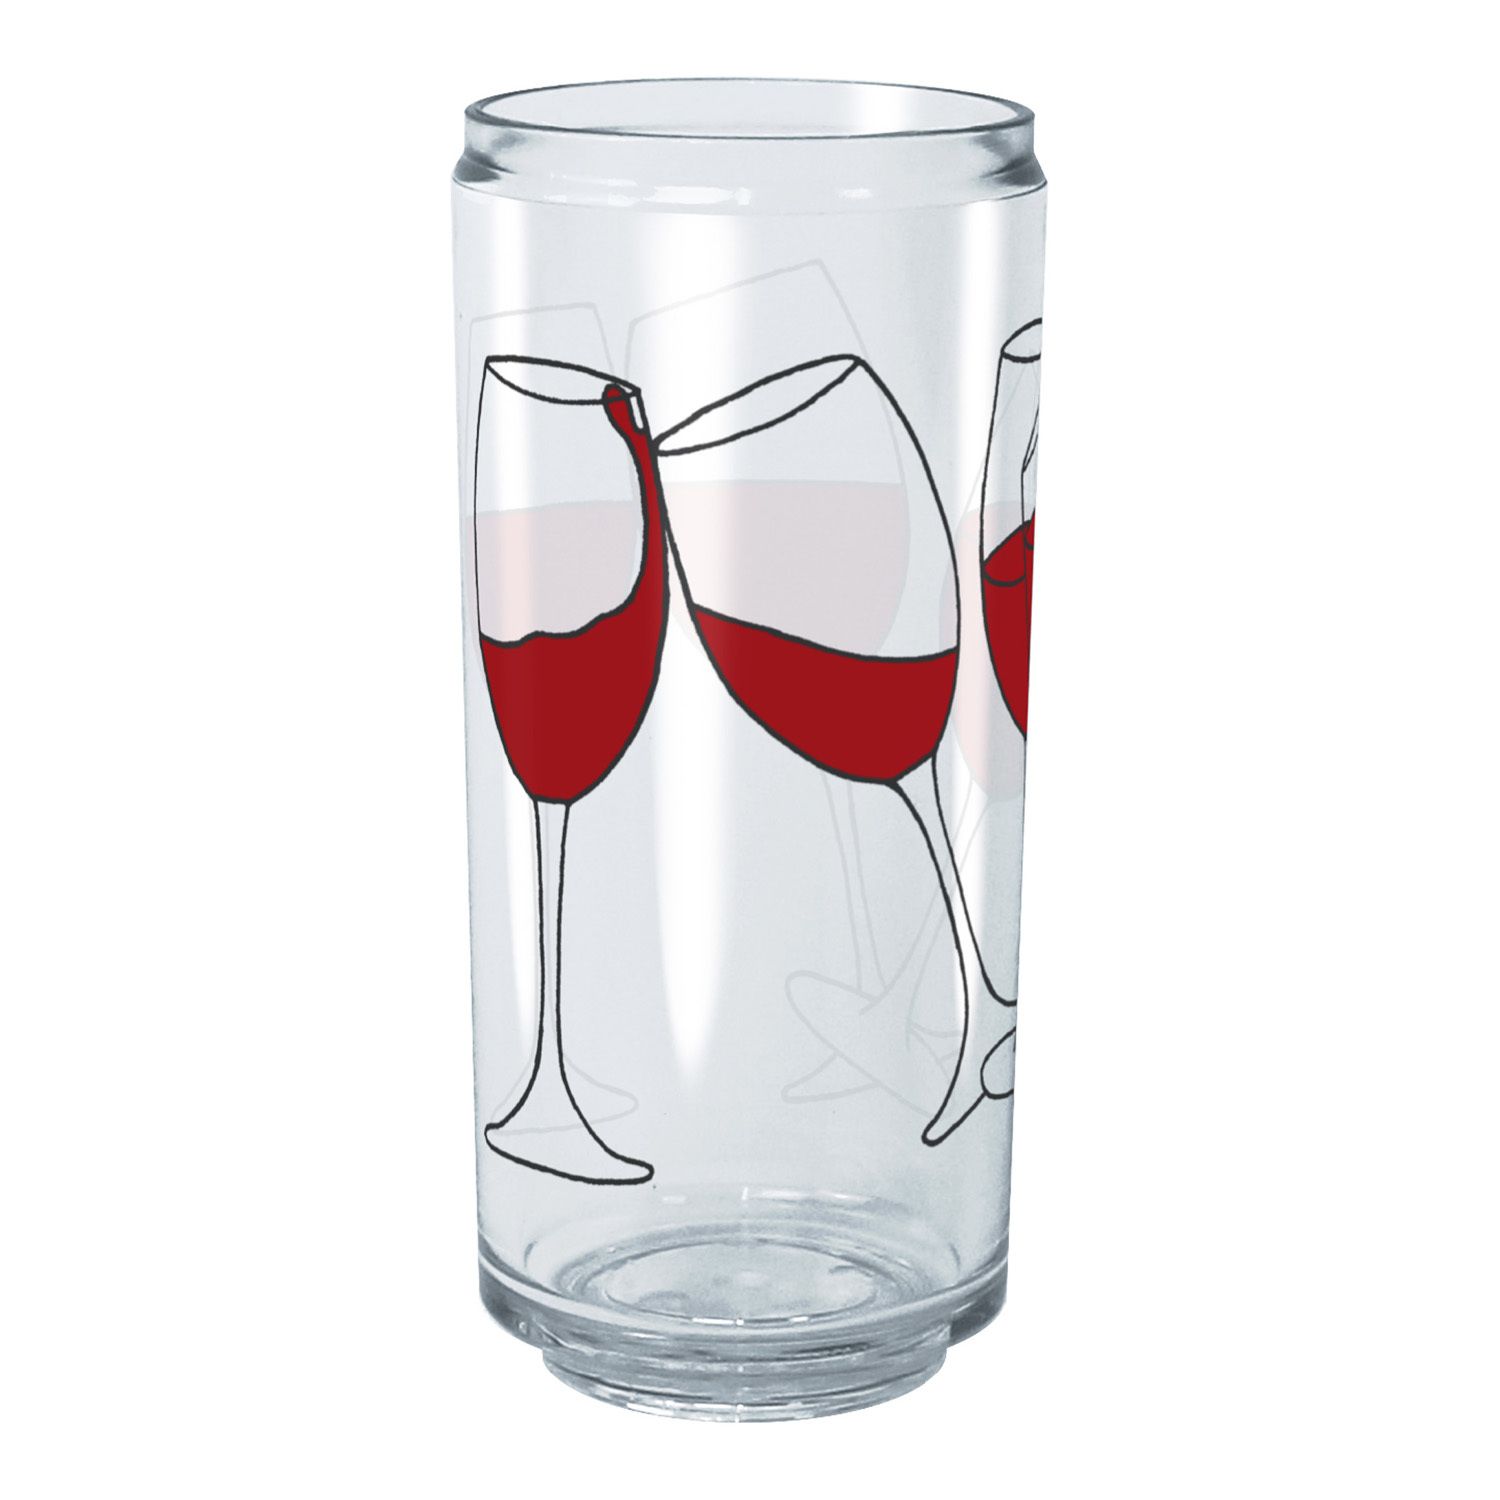 Food Network™ Modesto 4-pc. Red Wine Glass Set